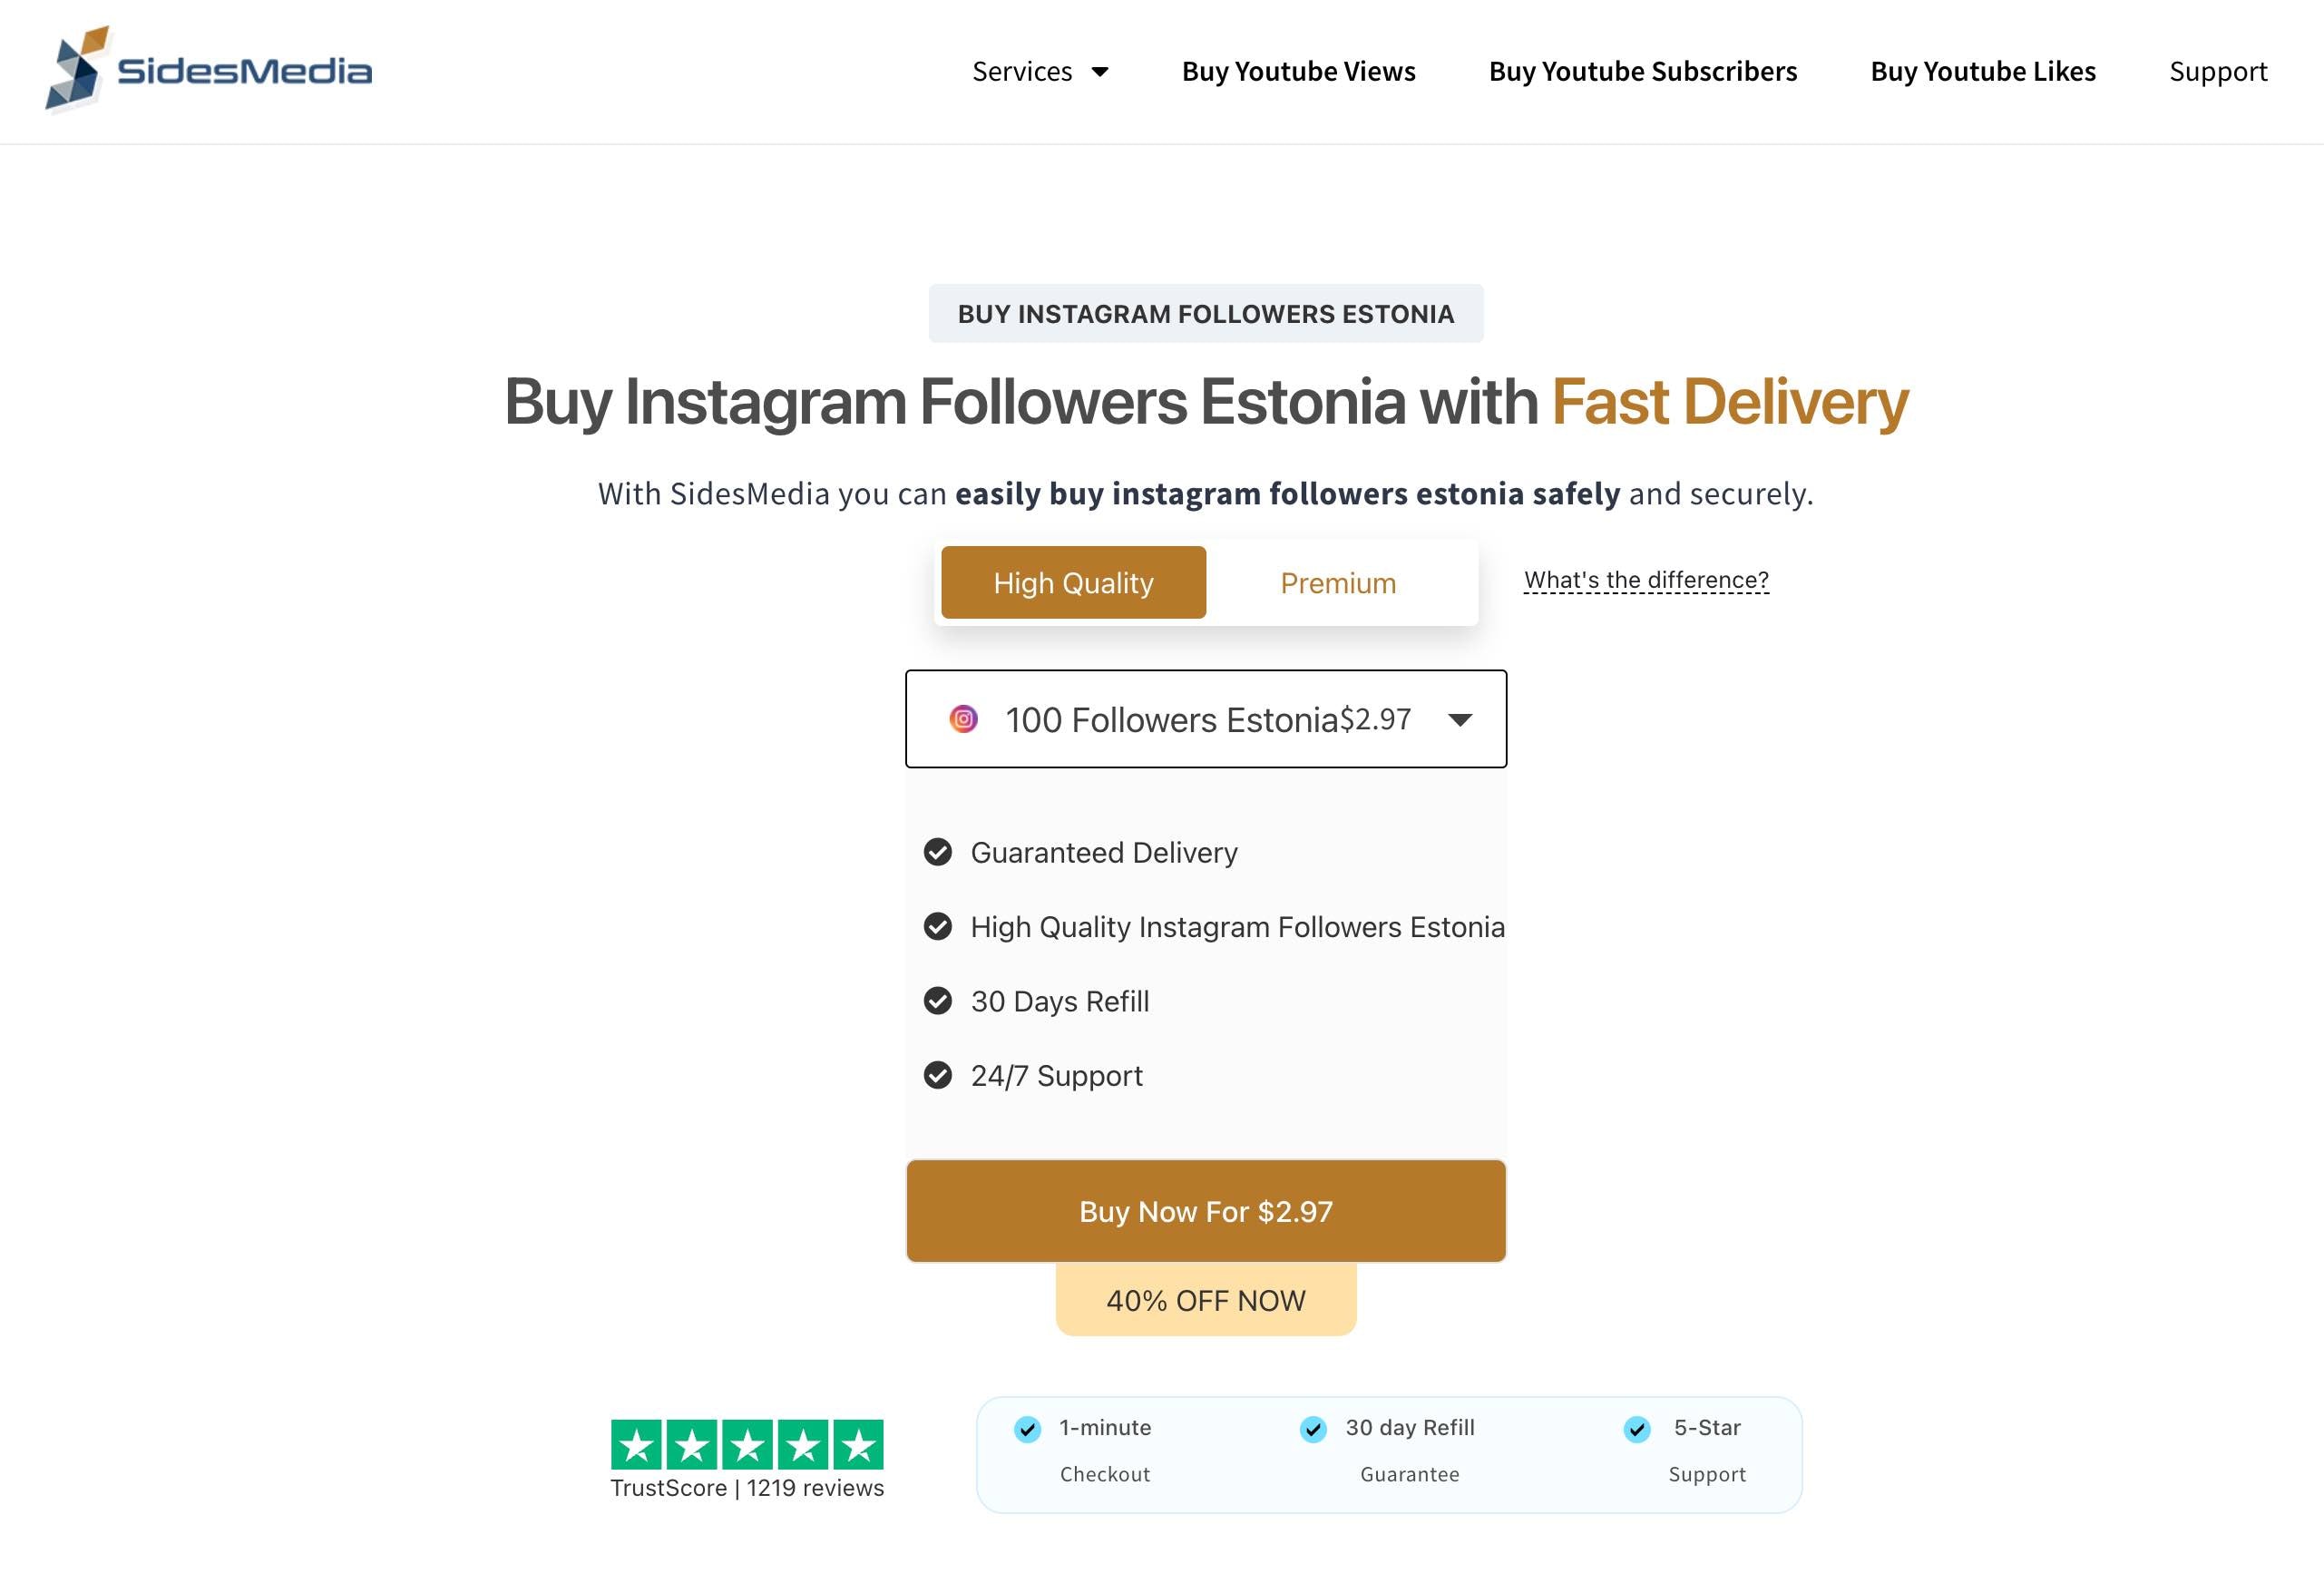 sidesmedia buy instagram followers estonia page